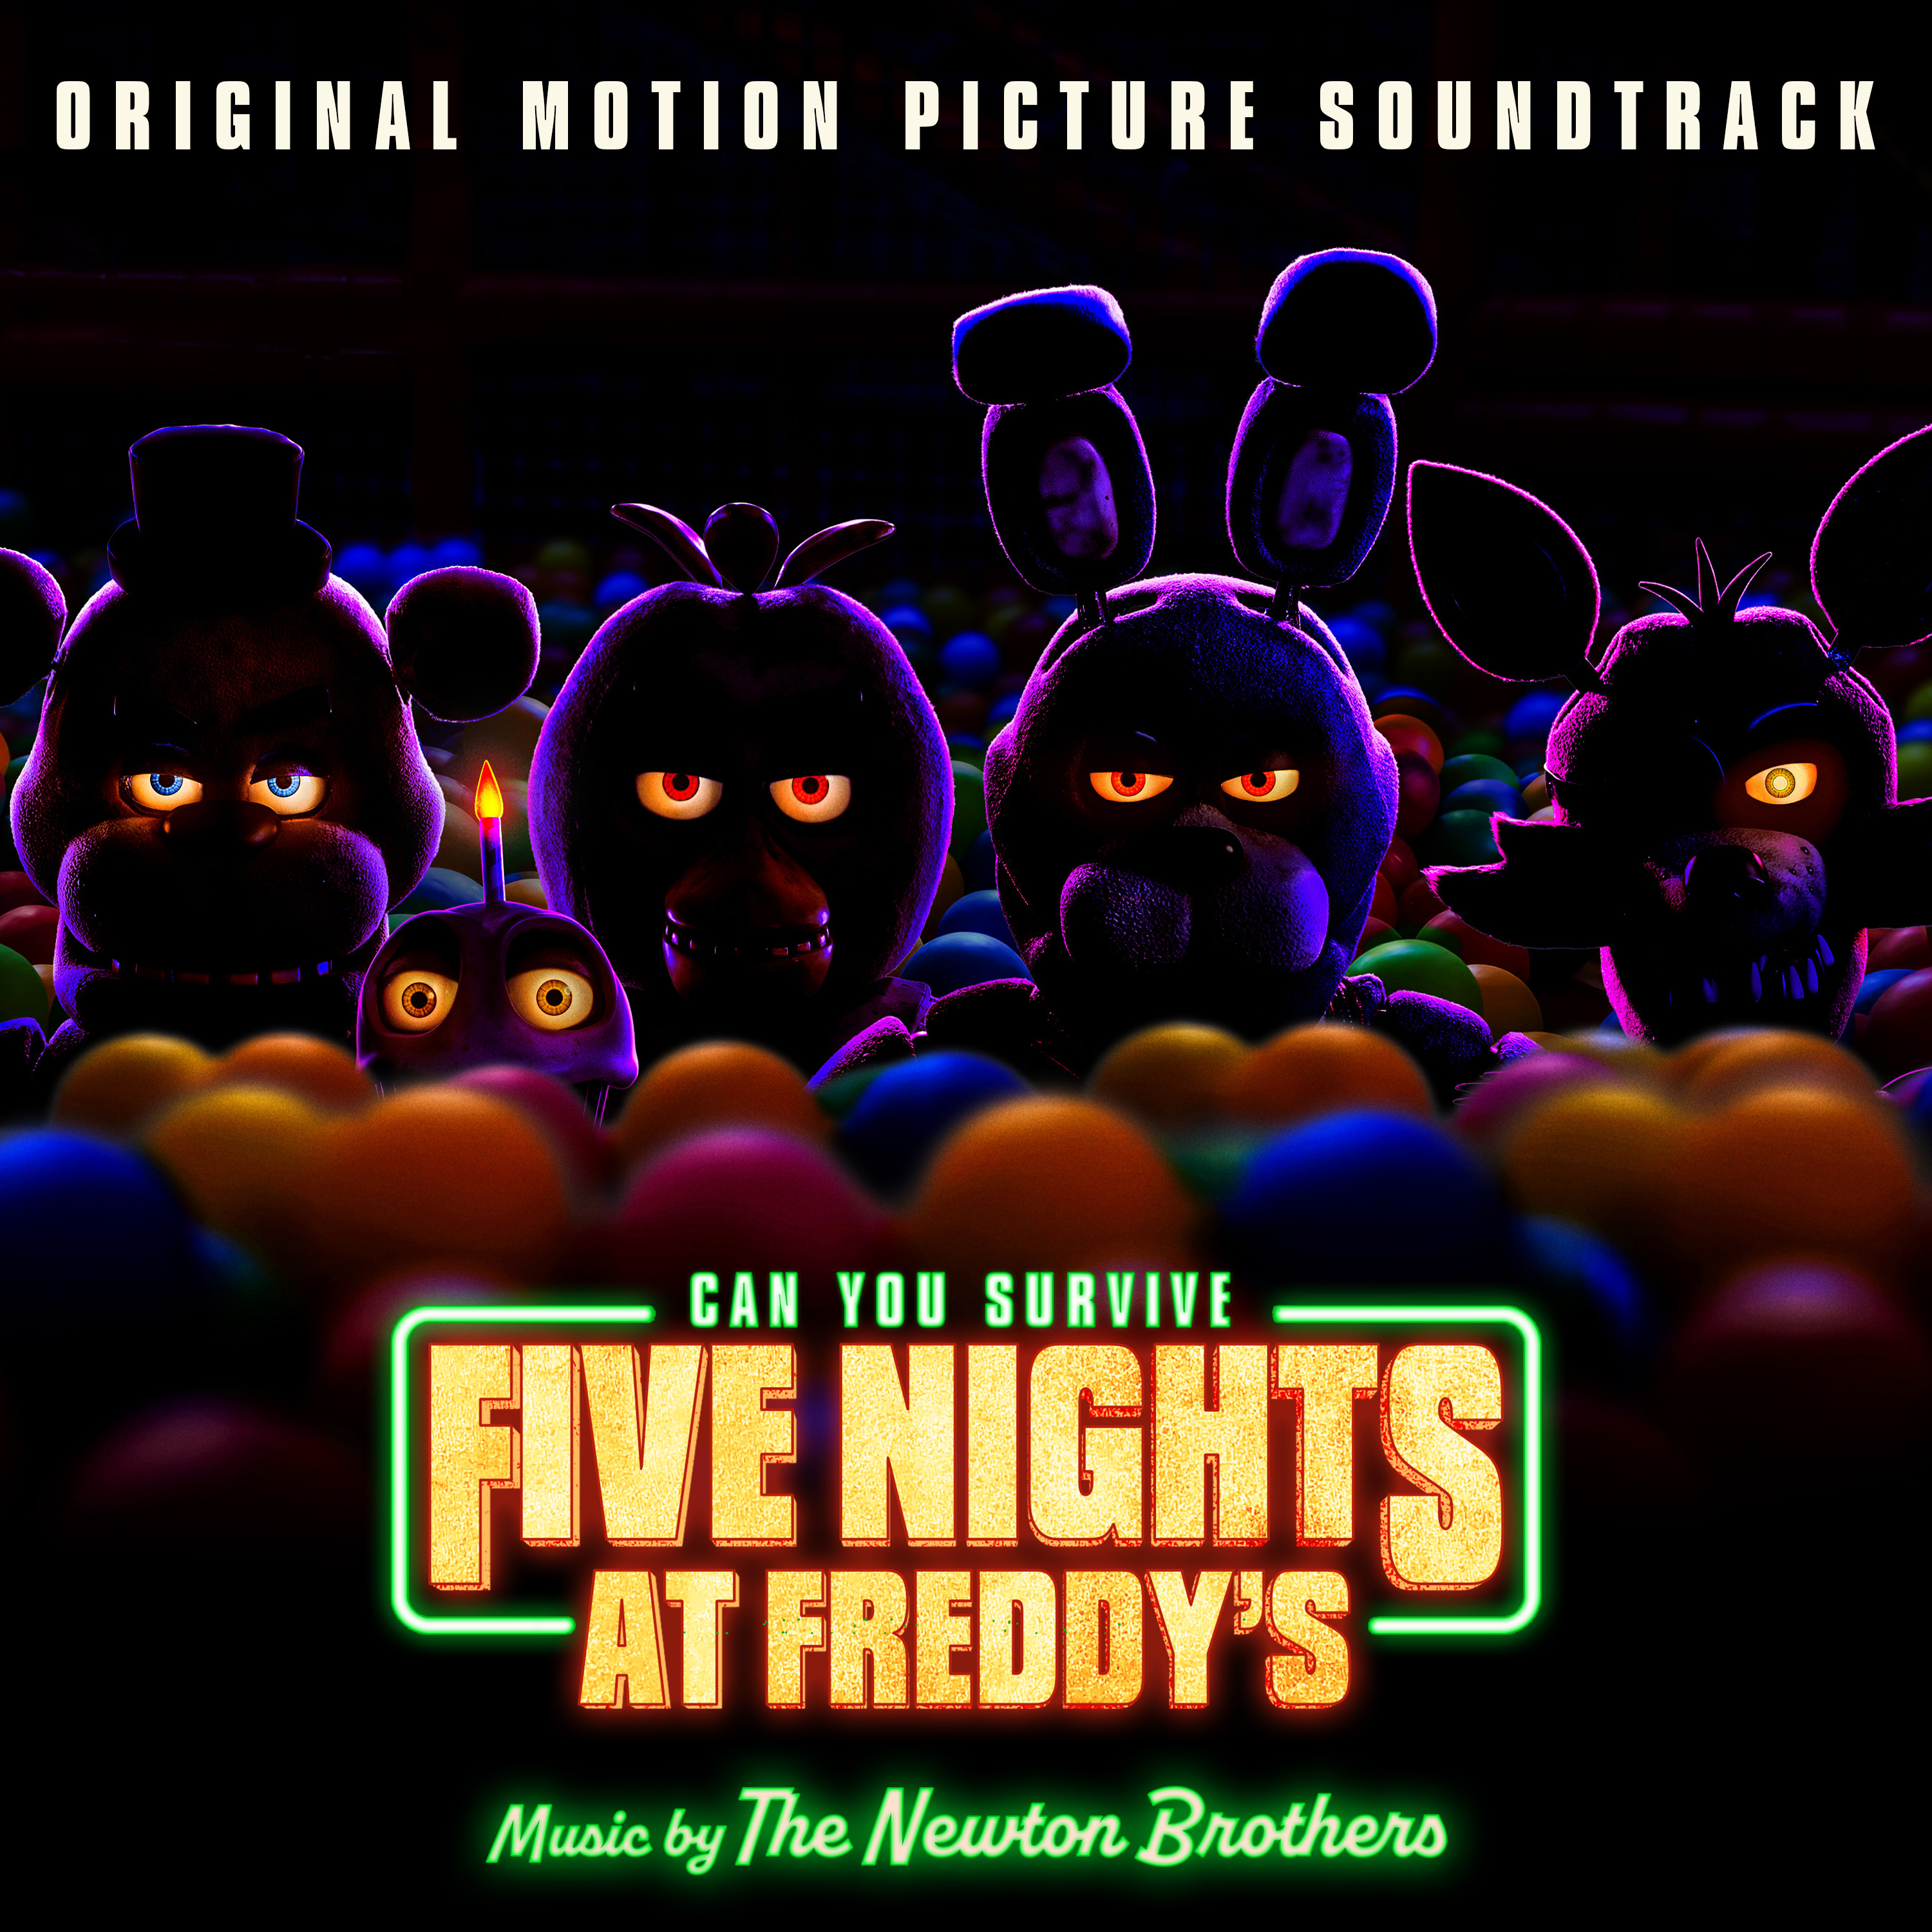 Five Nights at Freddy's Review #fnaf #fnafmovie #fivenightsatfreddys #